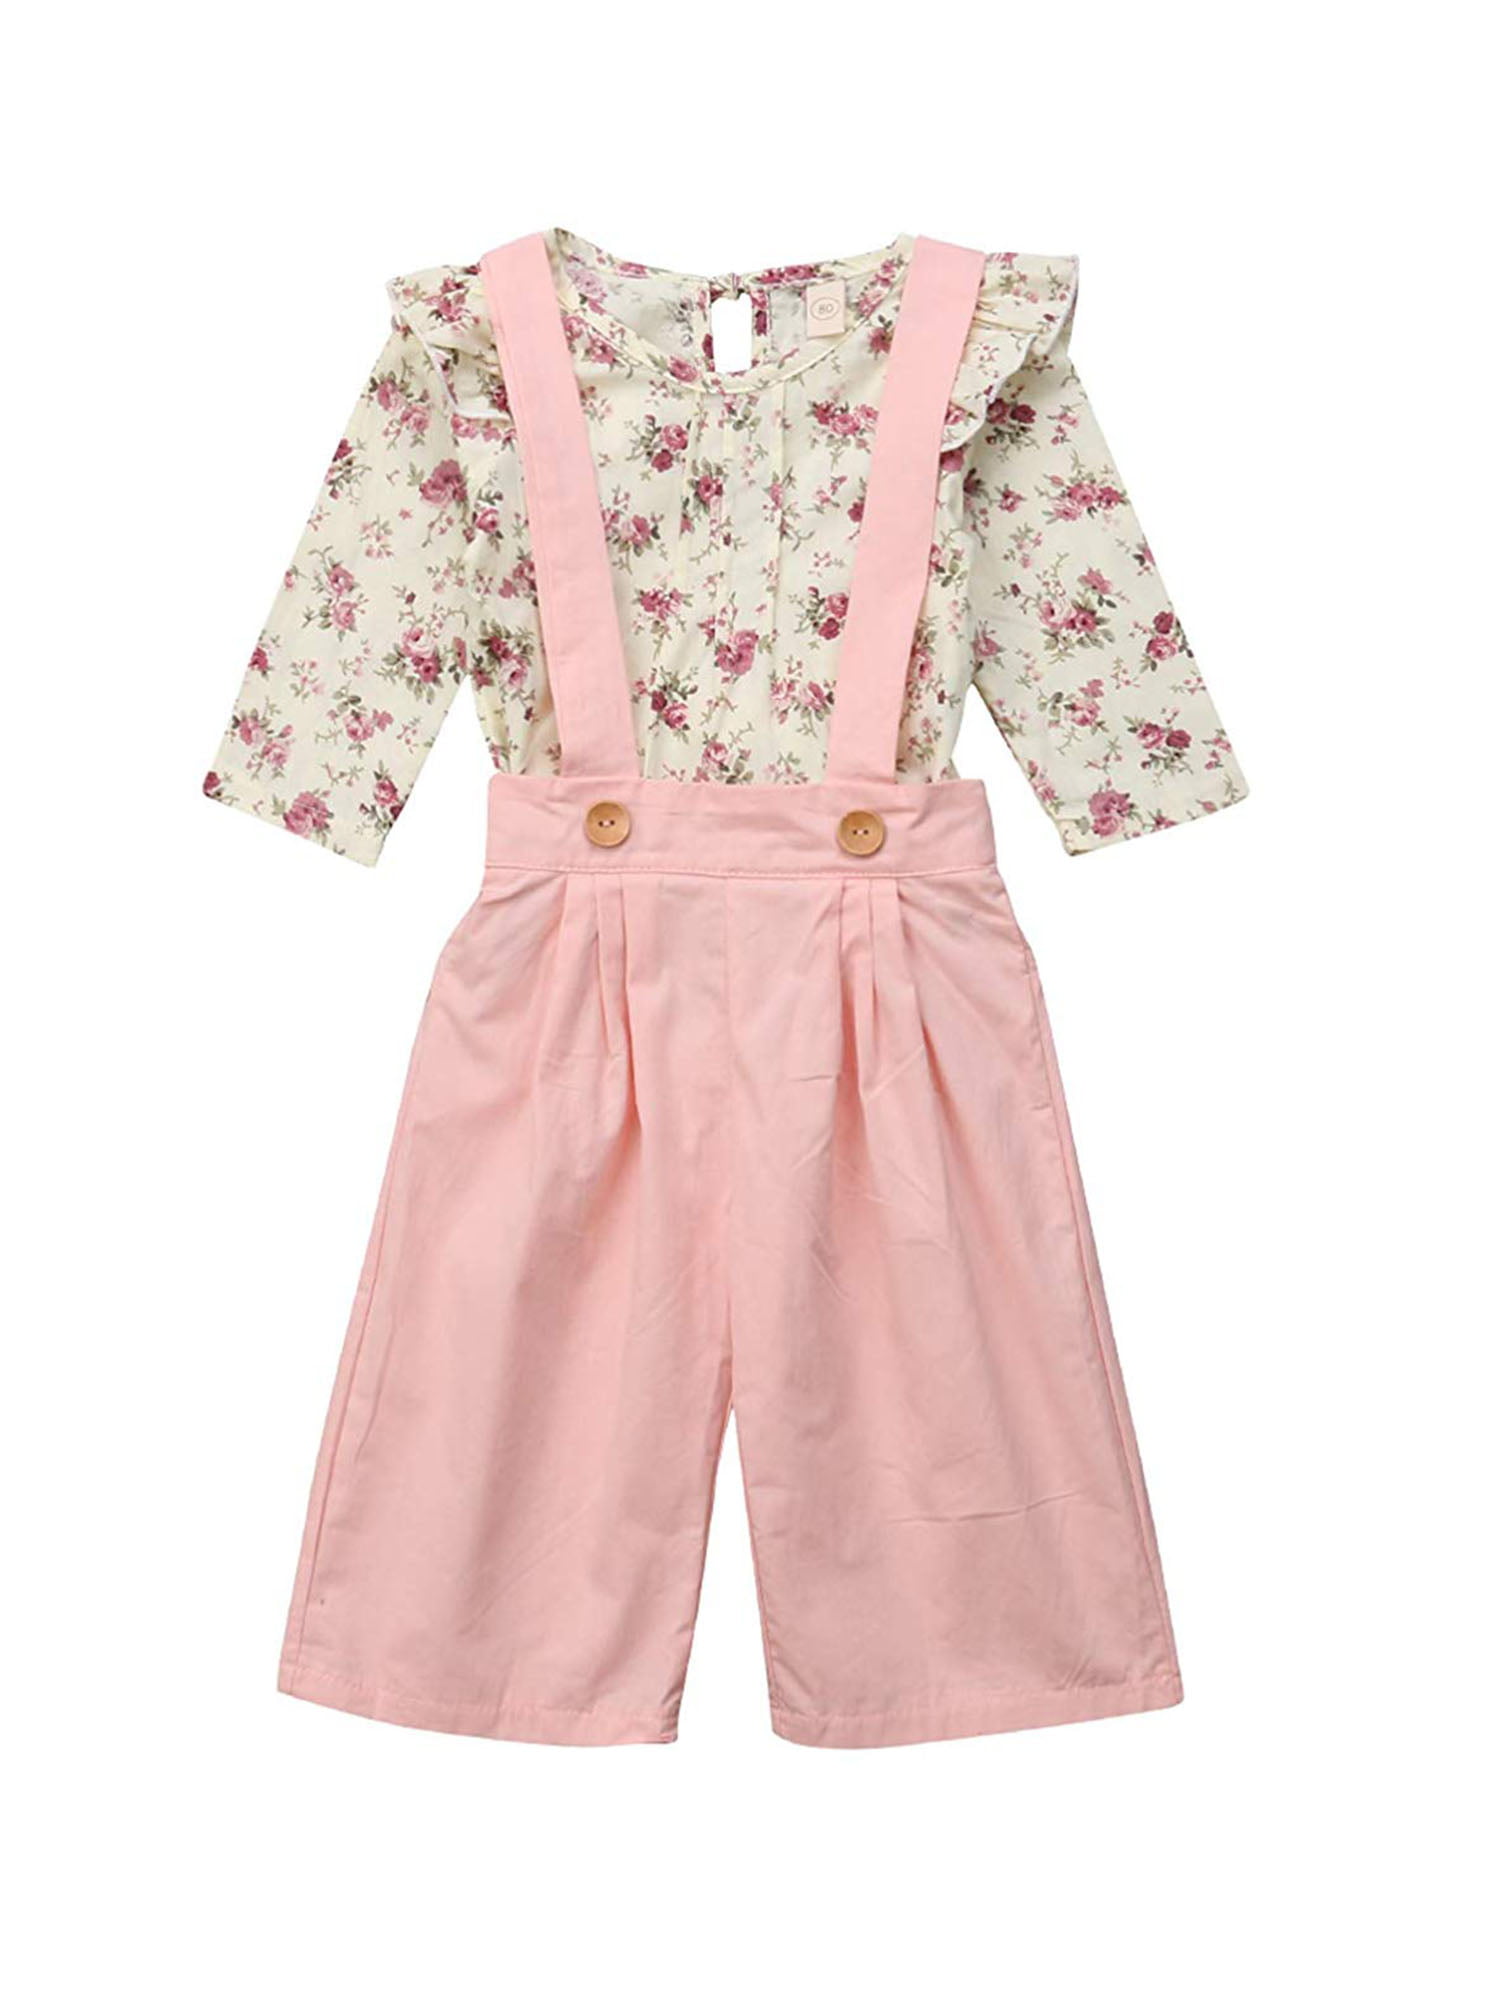 Mountain Warehouse Coeus 2pcs Suit Toddler Kids Baby Girls Outfits Short Sleeve T-Shirt+Pants Clothes Set